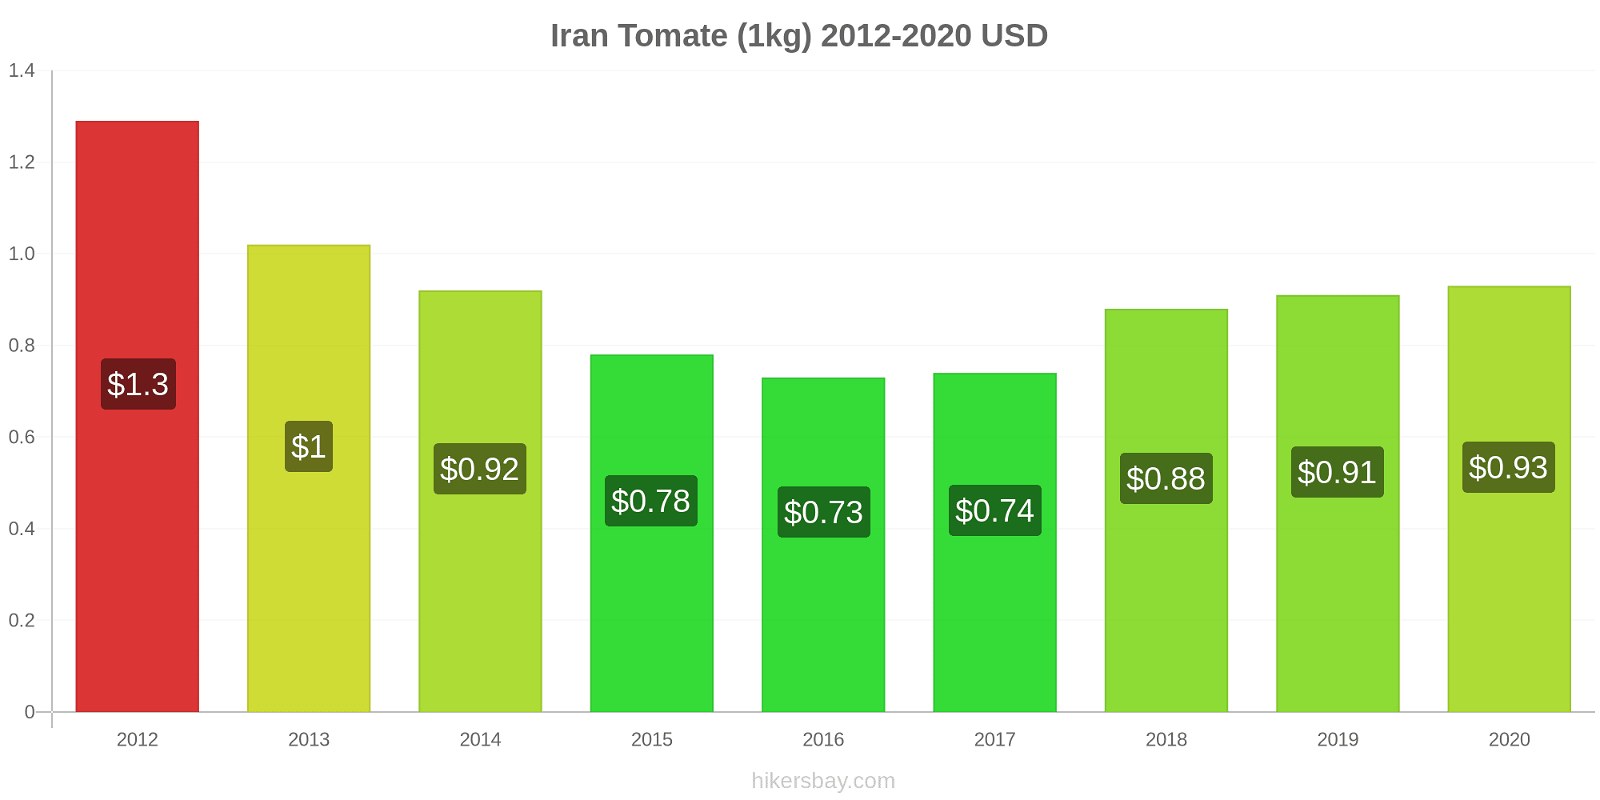 Iran Preisänderungen Tomaten (1kg) hikersbay.com